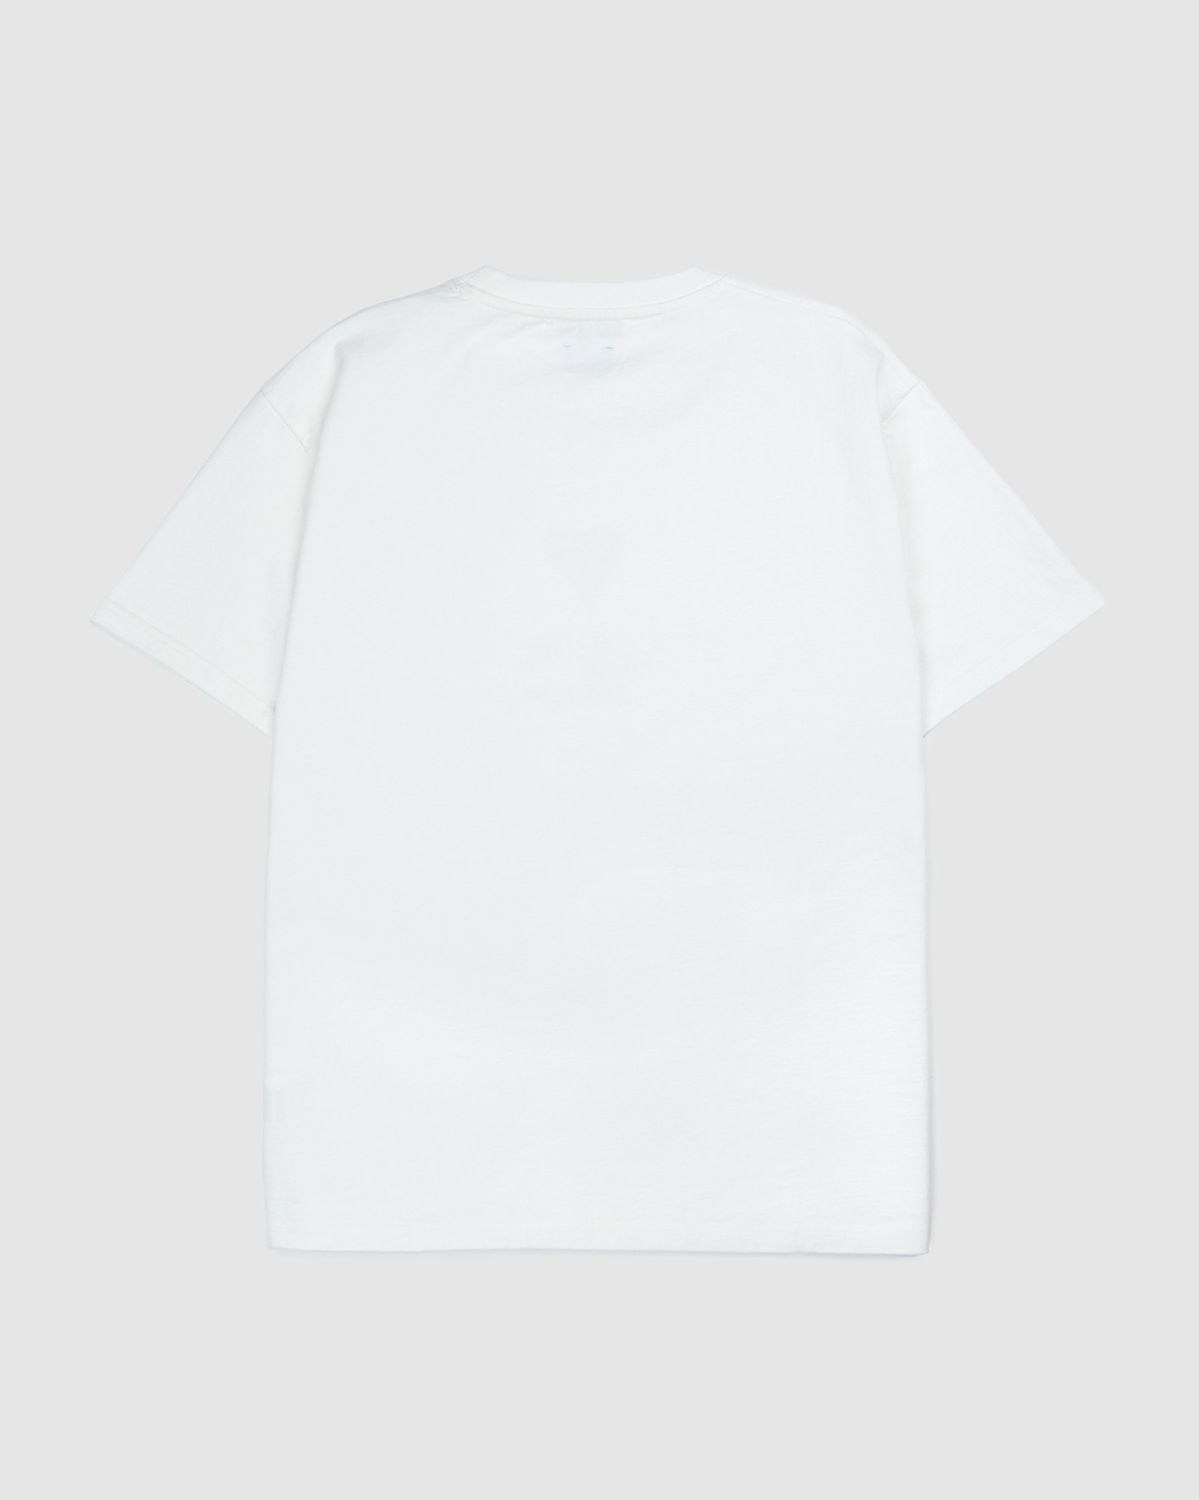 Colette Mon Amour – Heart T-Shirt White - Tops - White - Image 2